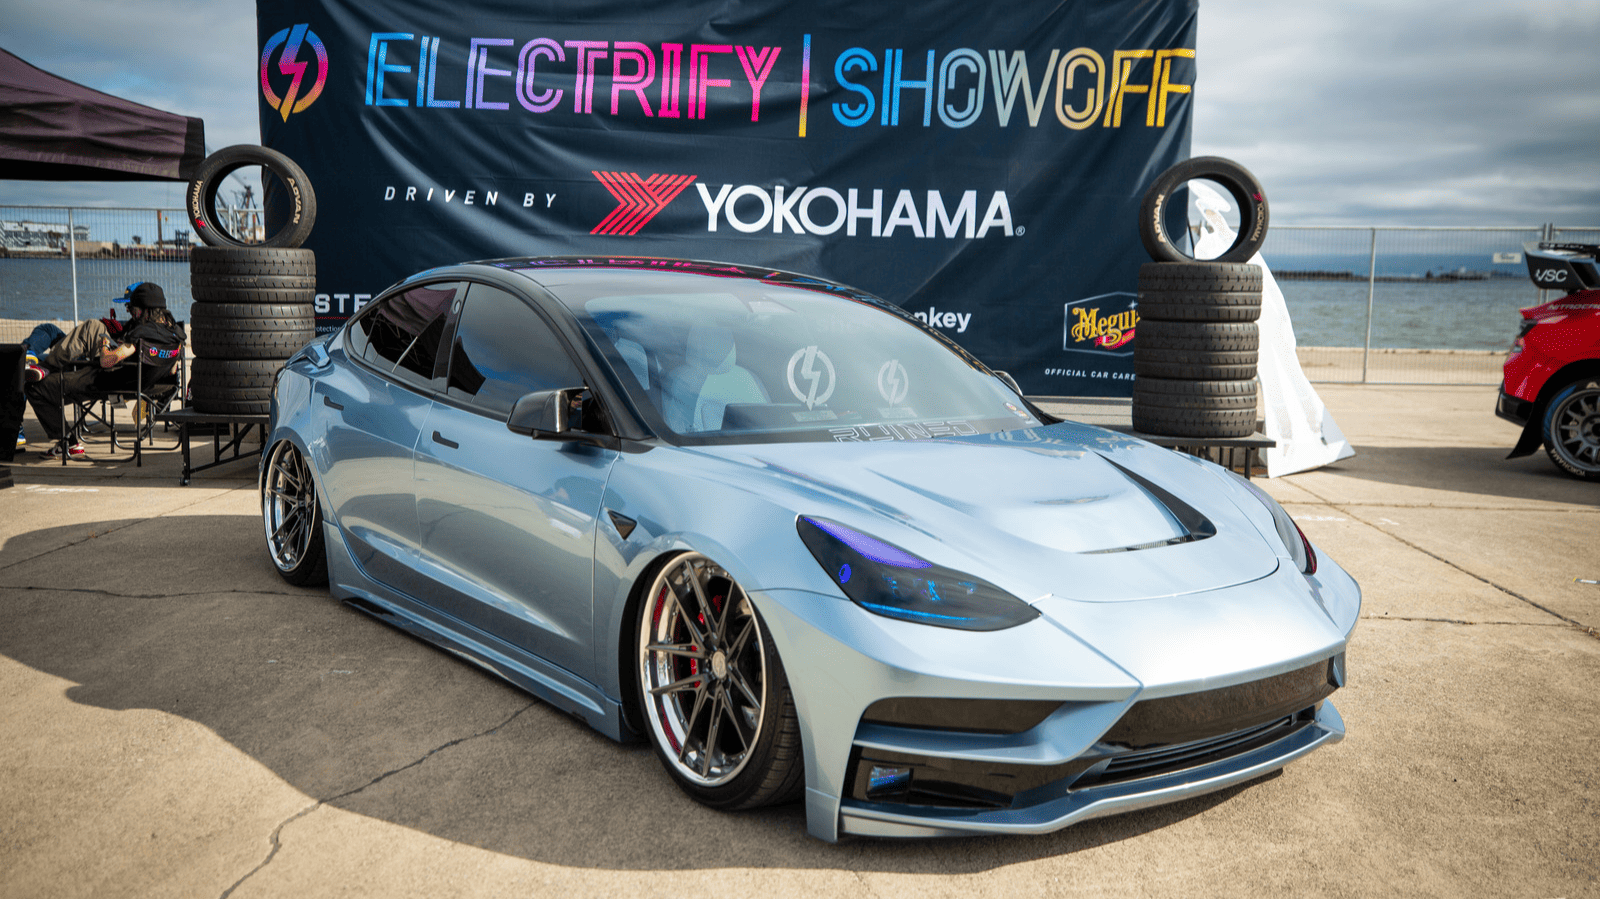 Unleashing the Beauty Chris Trujillo Tesla Model 3 Transformation Electrify Expo Showoff News